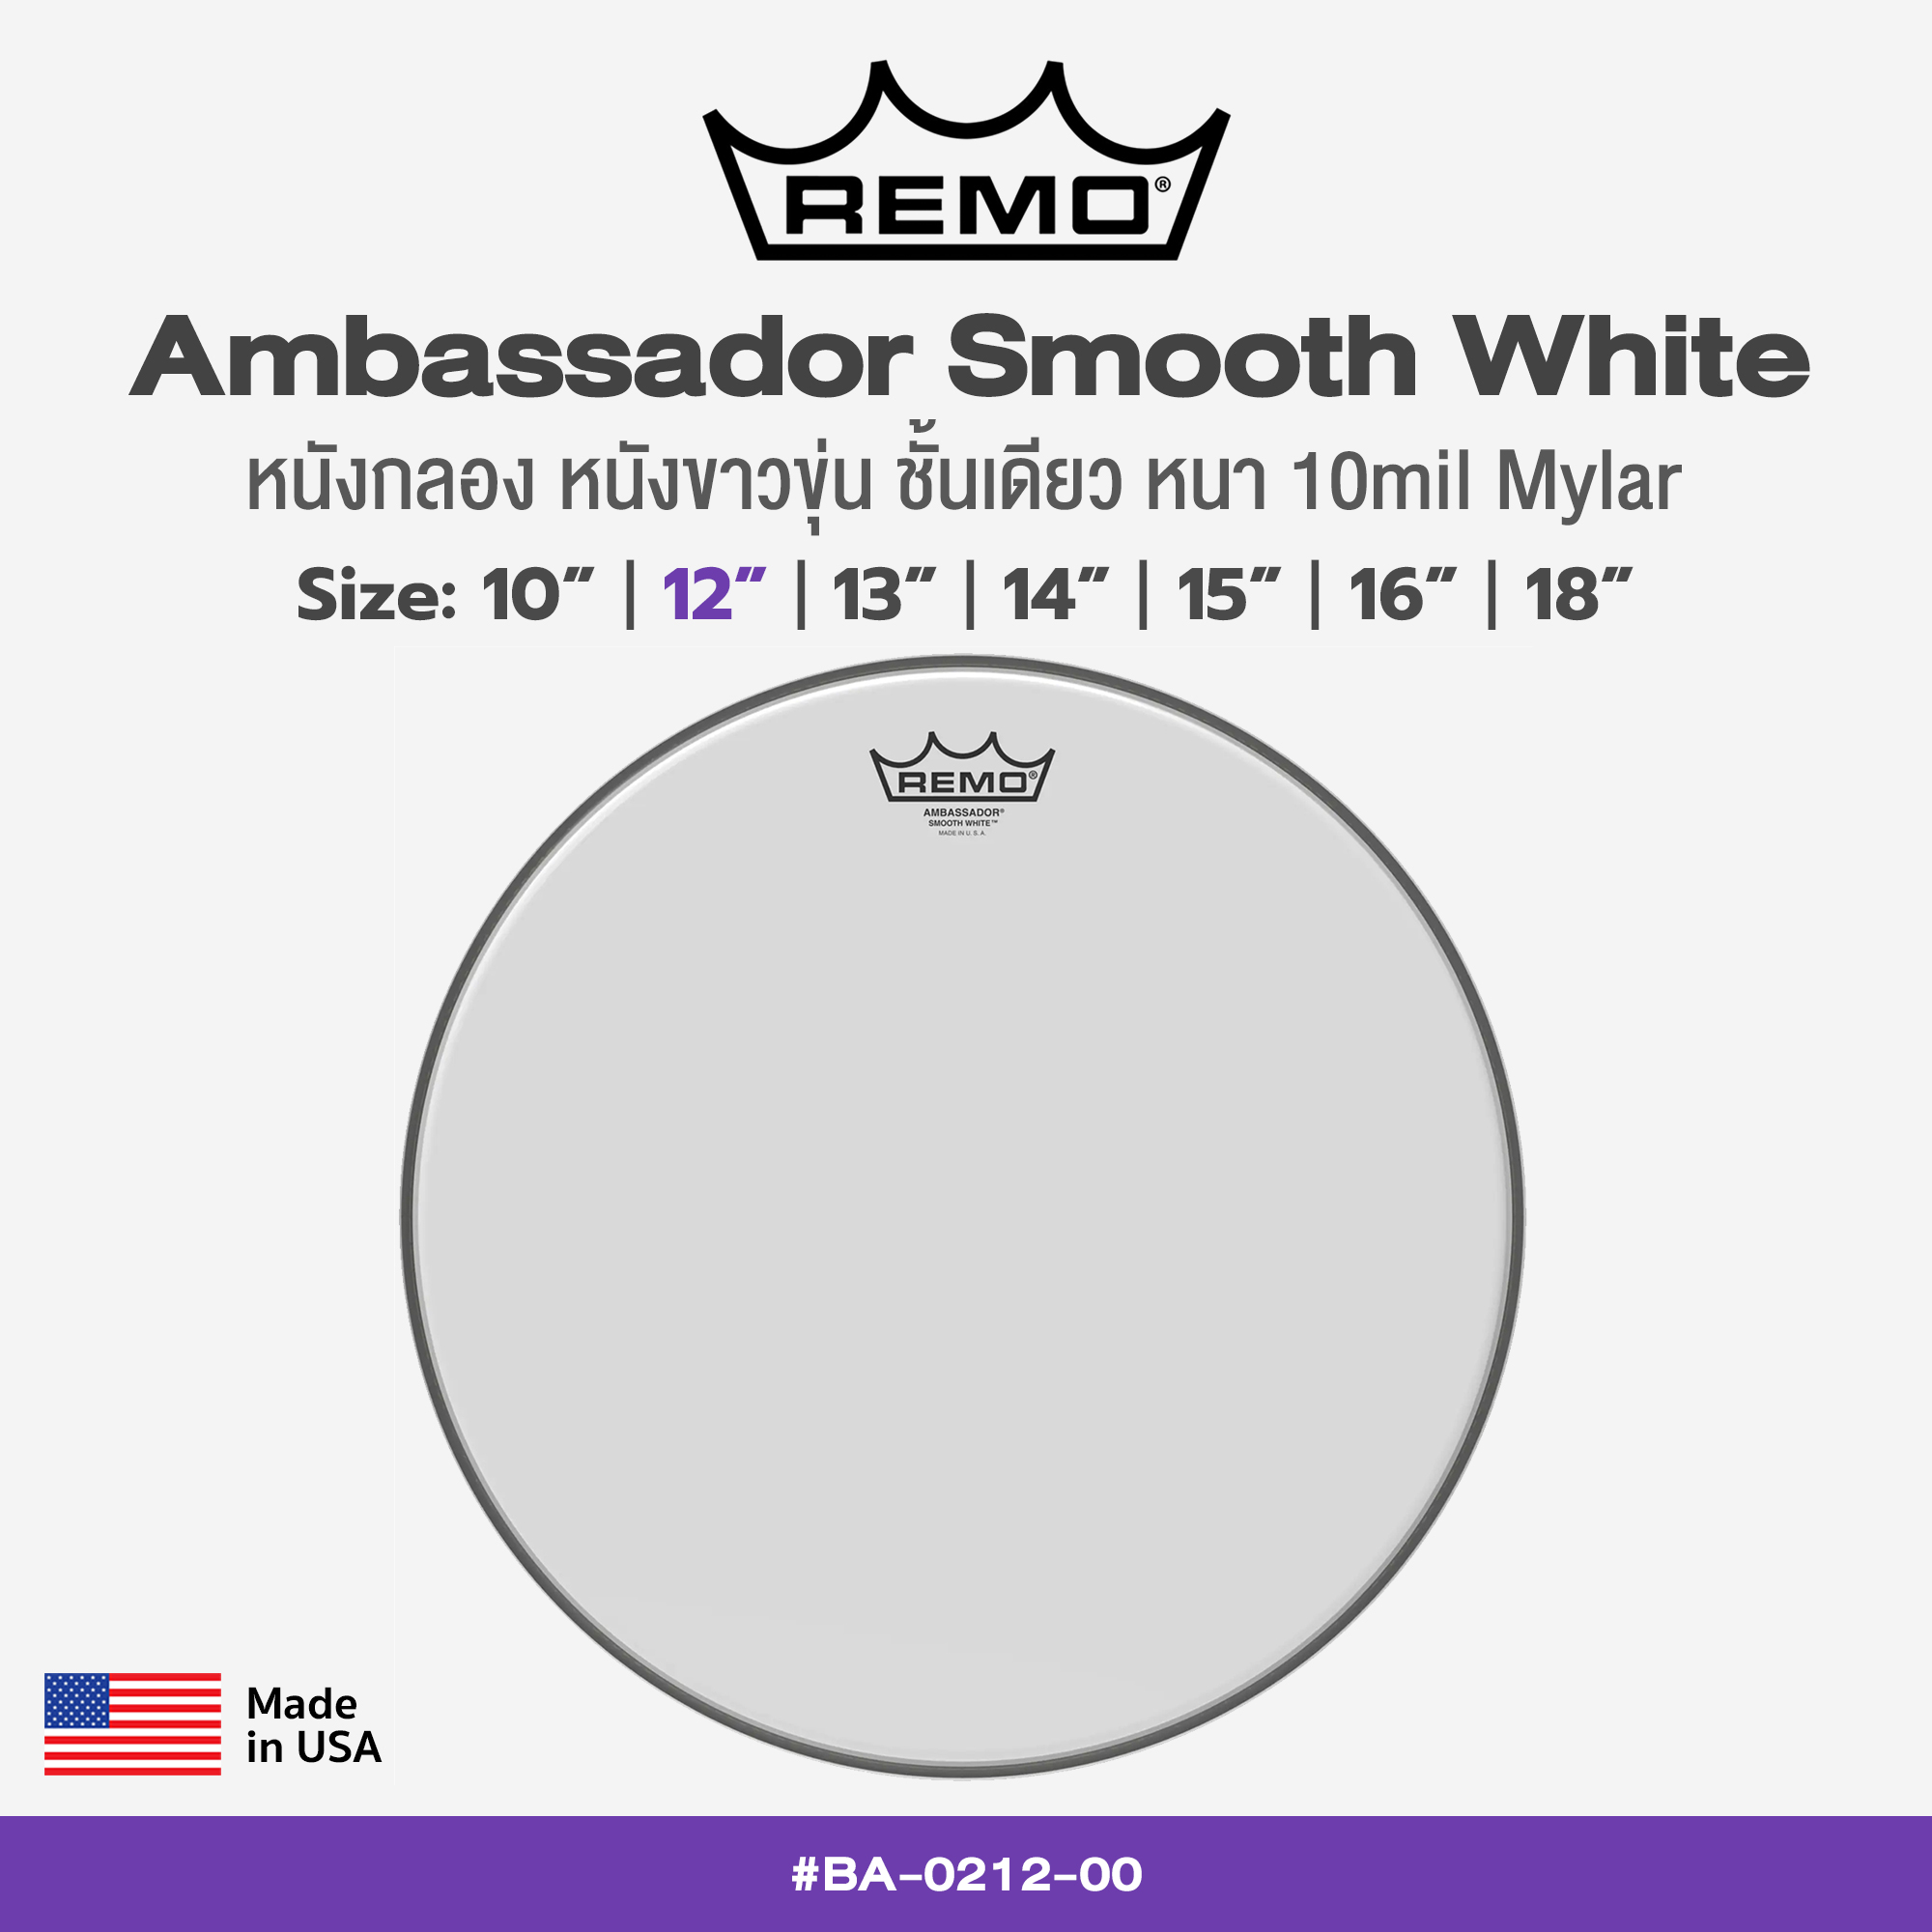 Remo Ambassador Smooth White